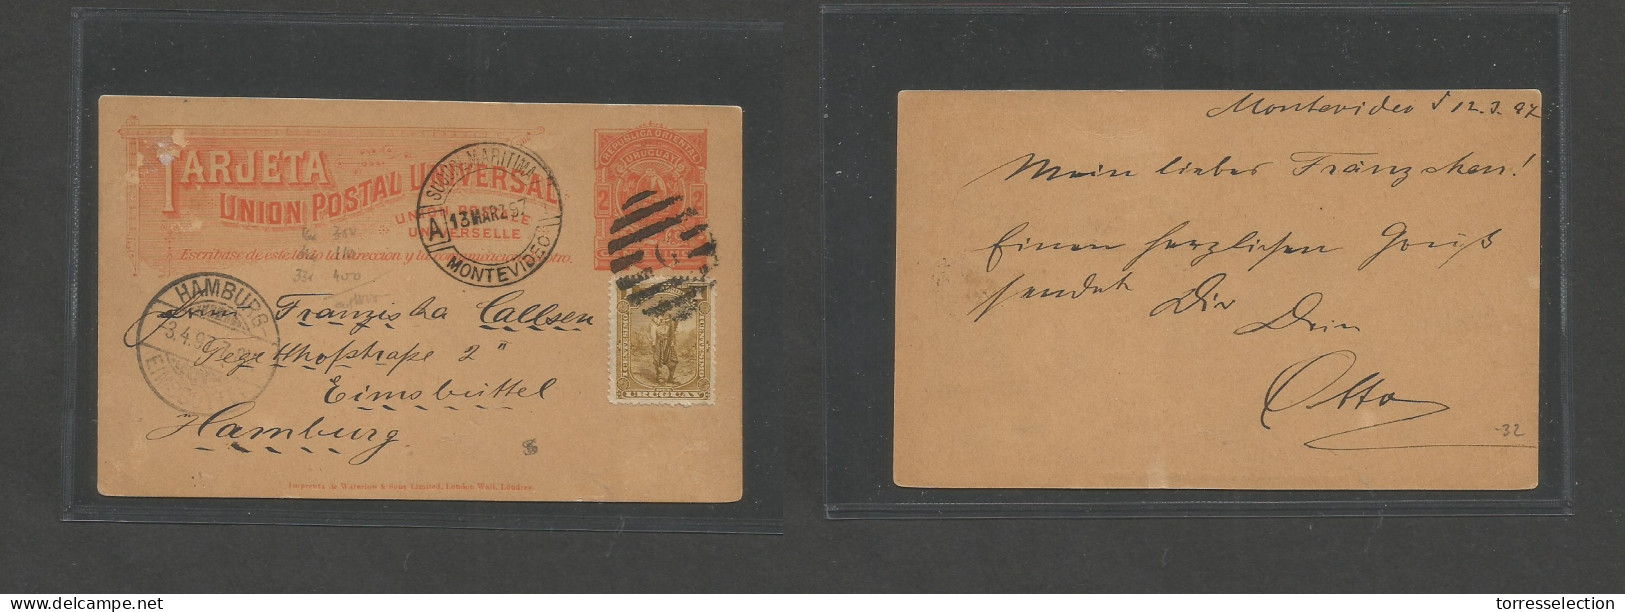 URUGUAY. 1897 (12 March) Montevideo - Germany, Hamburg (3 Apr) 2c Red Stat Card + Adtl "G" Grill + Maritima. Fine Used.  - Uruguay